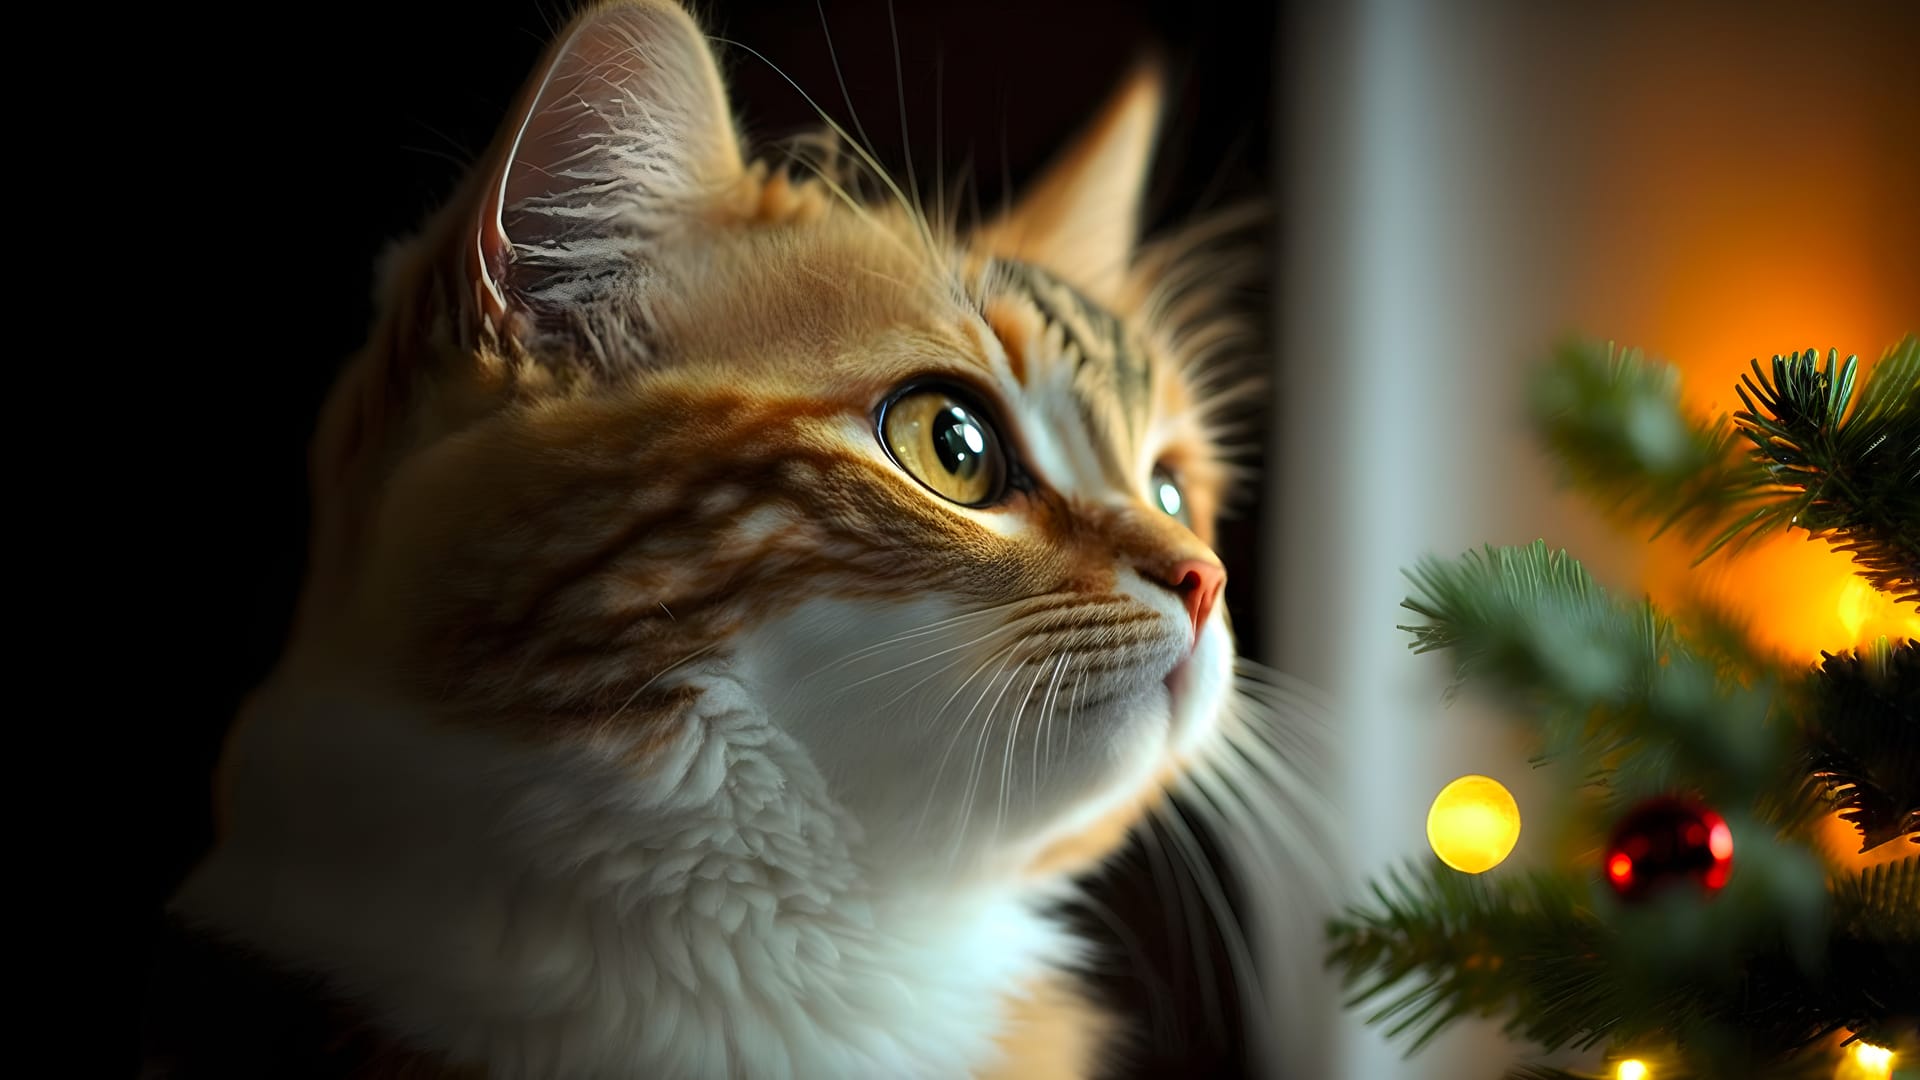 Cute ginger kitten looking christmas tree neural network generated art image